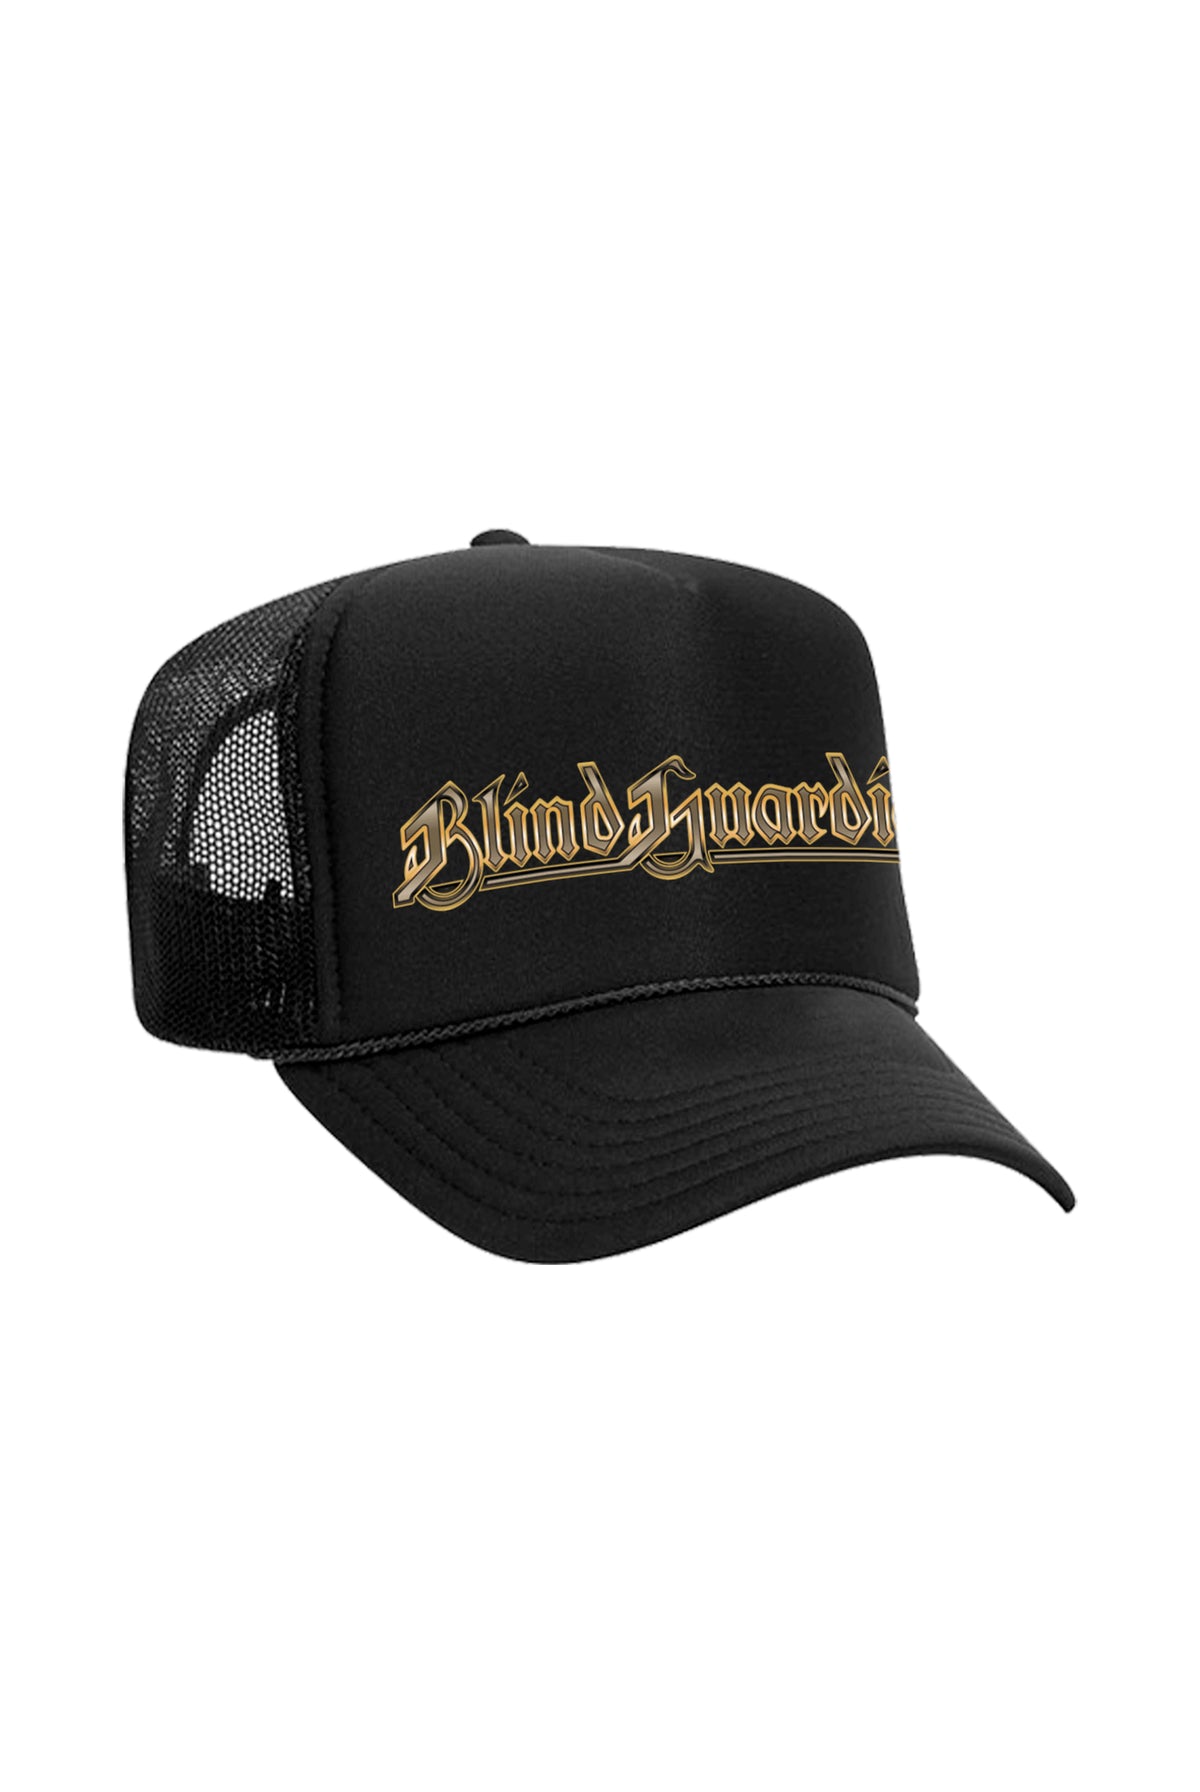 Blind Guardian Gold Logo Mesh Trucker Hat - Pre-Order